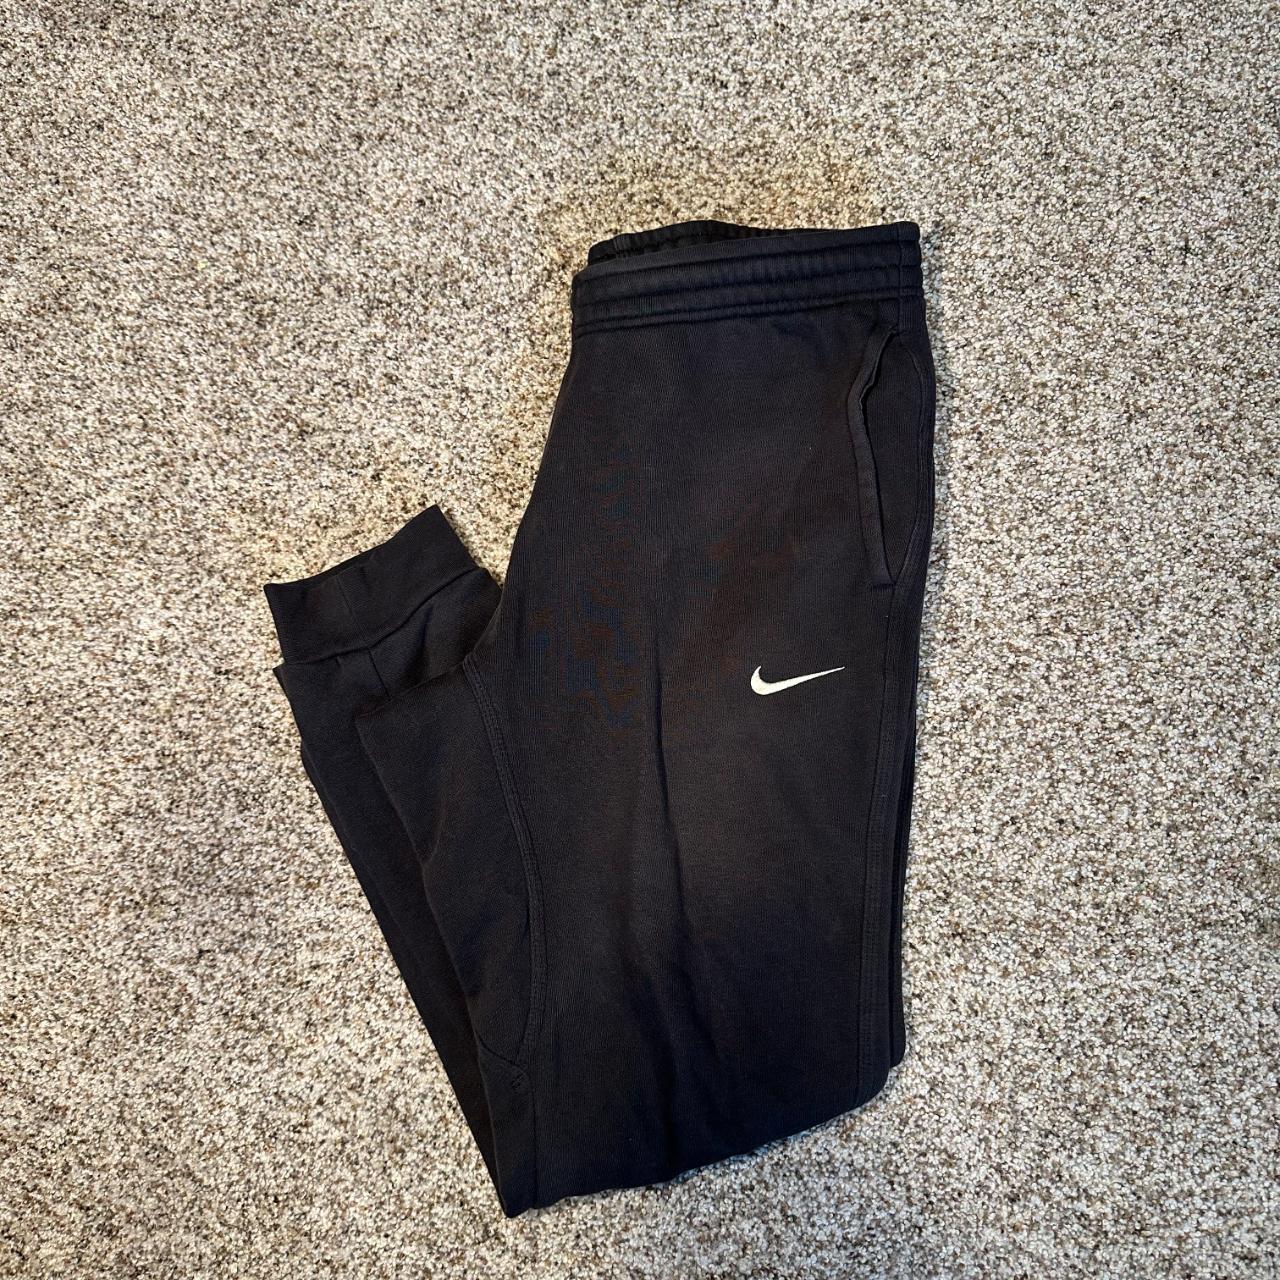 nike black sweatpants size medium no rips stains or... - Depop